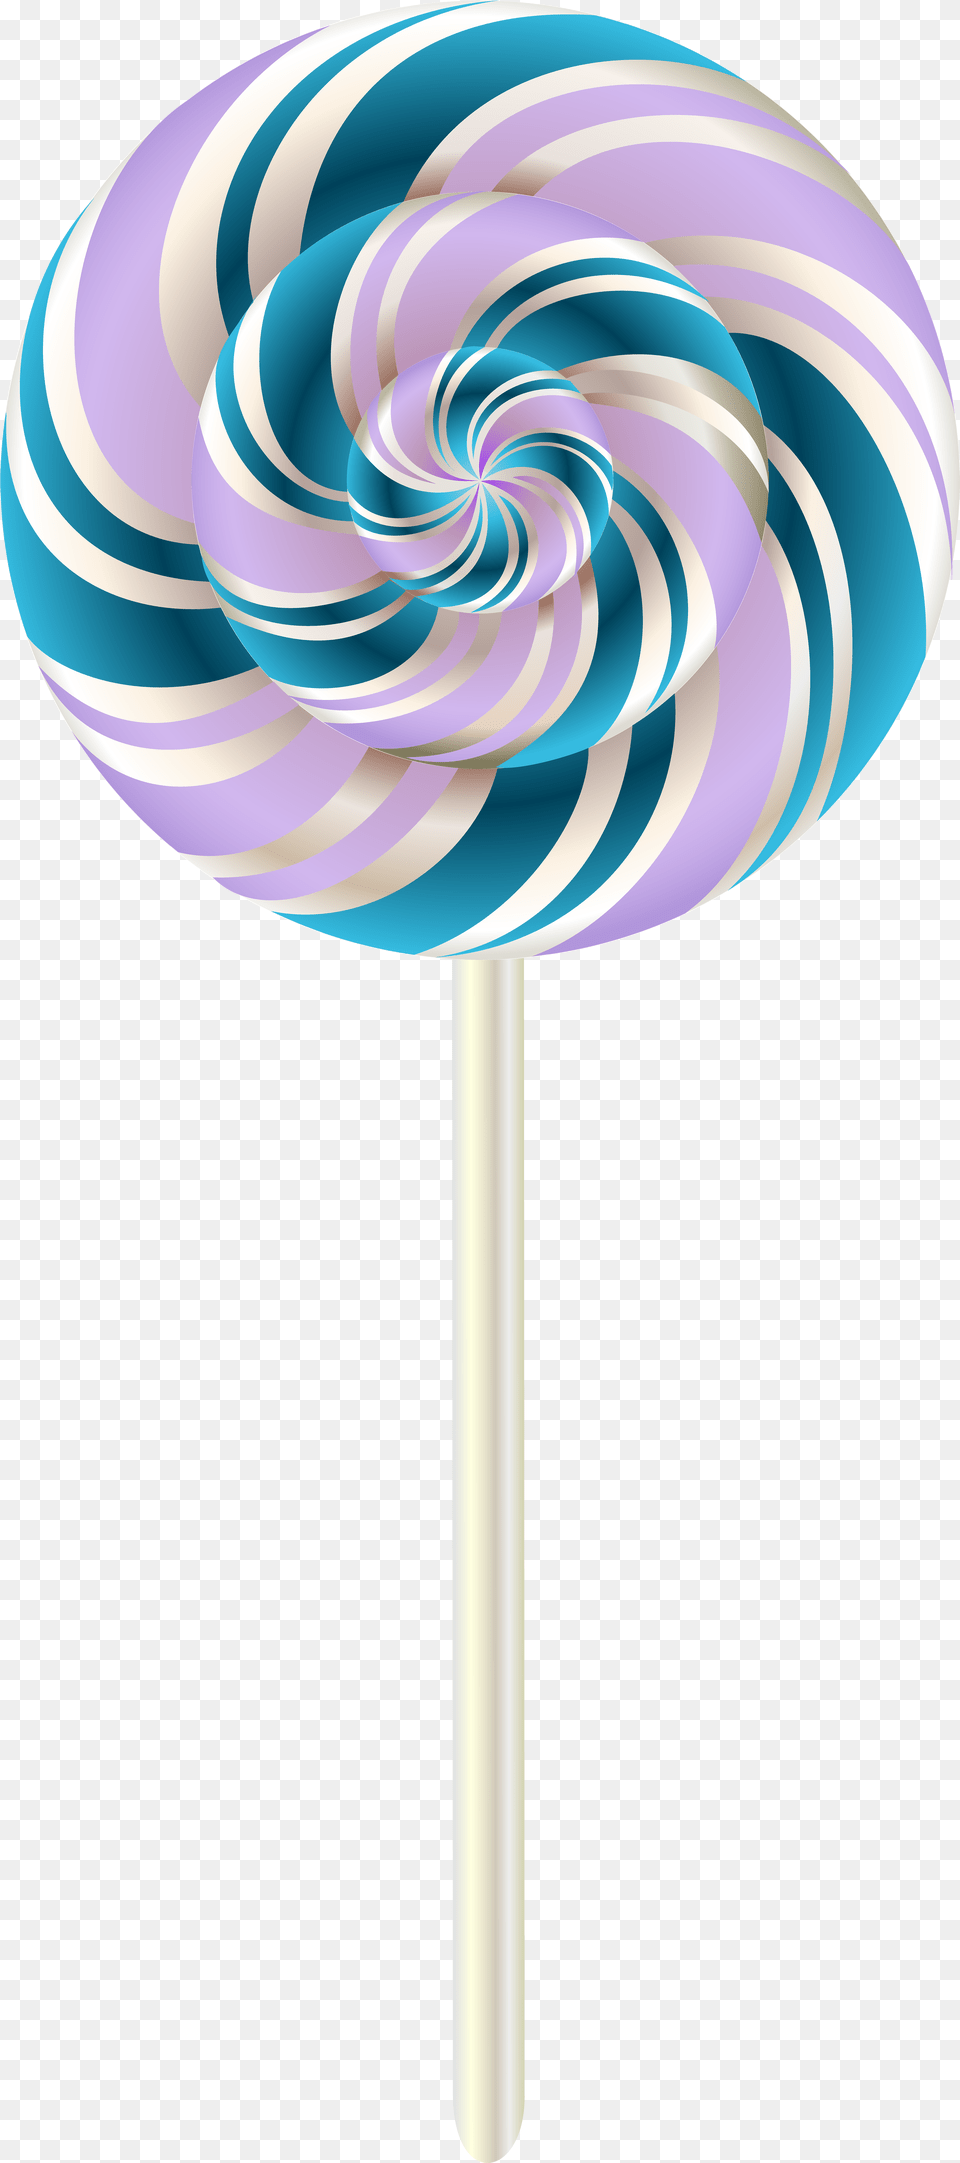 Rainbow Lollipop Download Lollipop, Candy, Food, Sweets Png Image